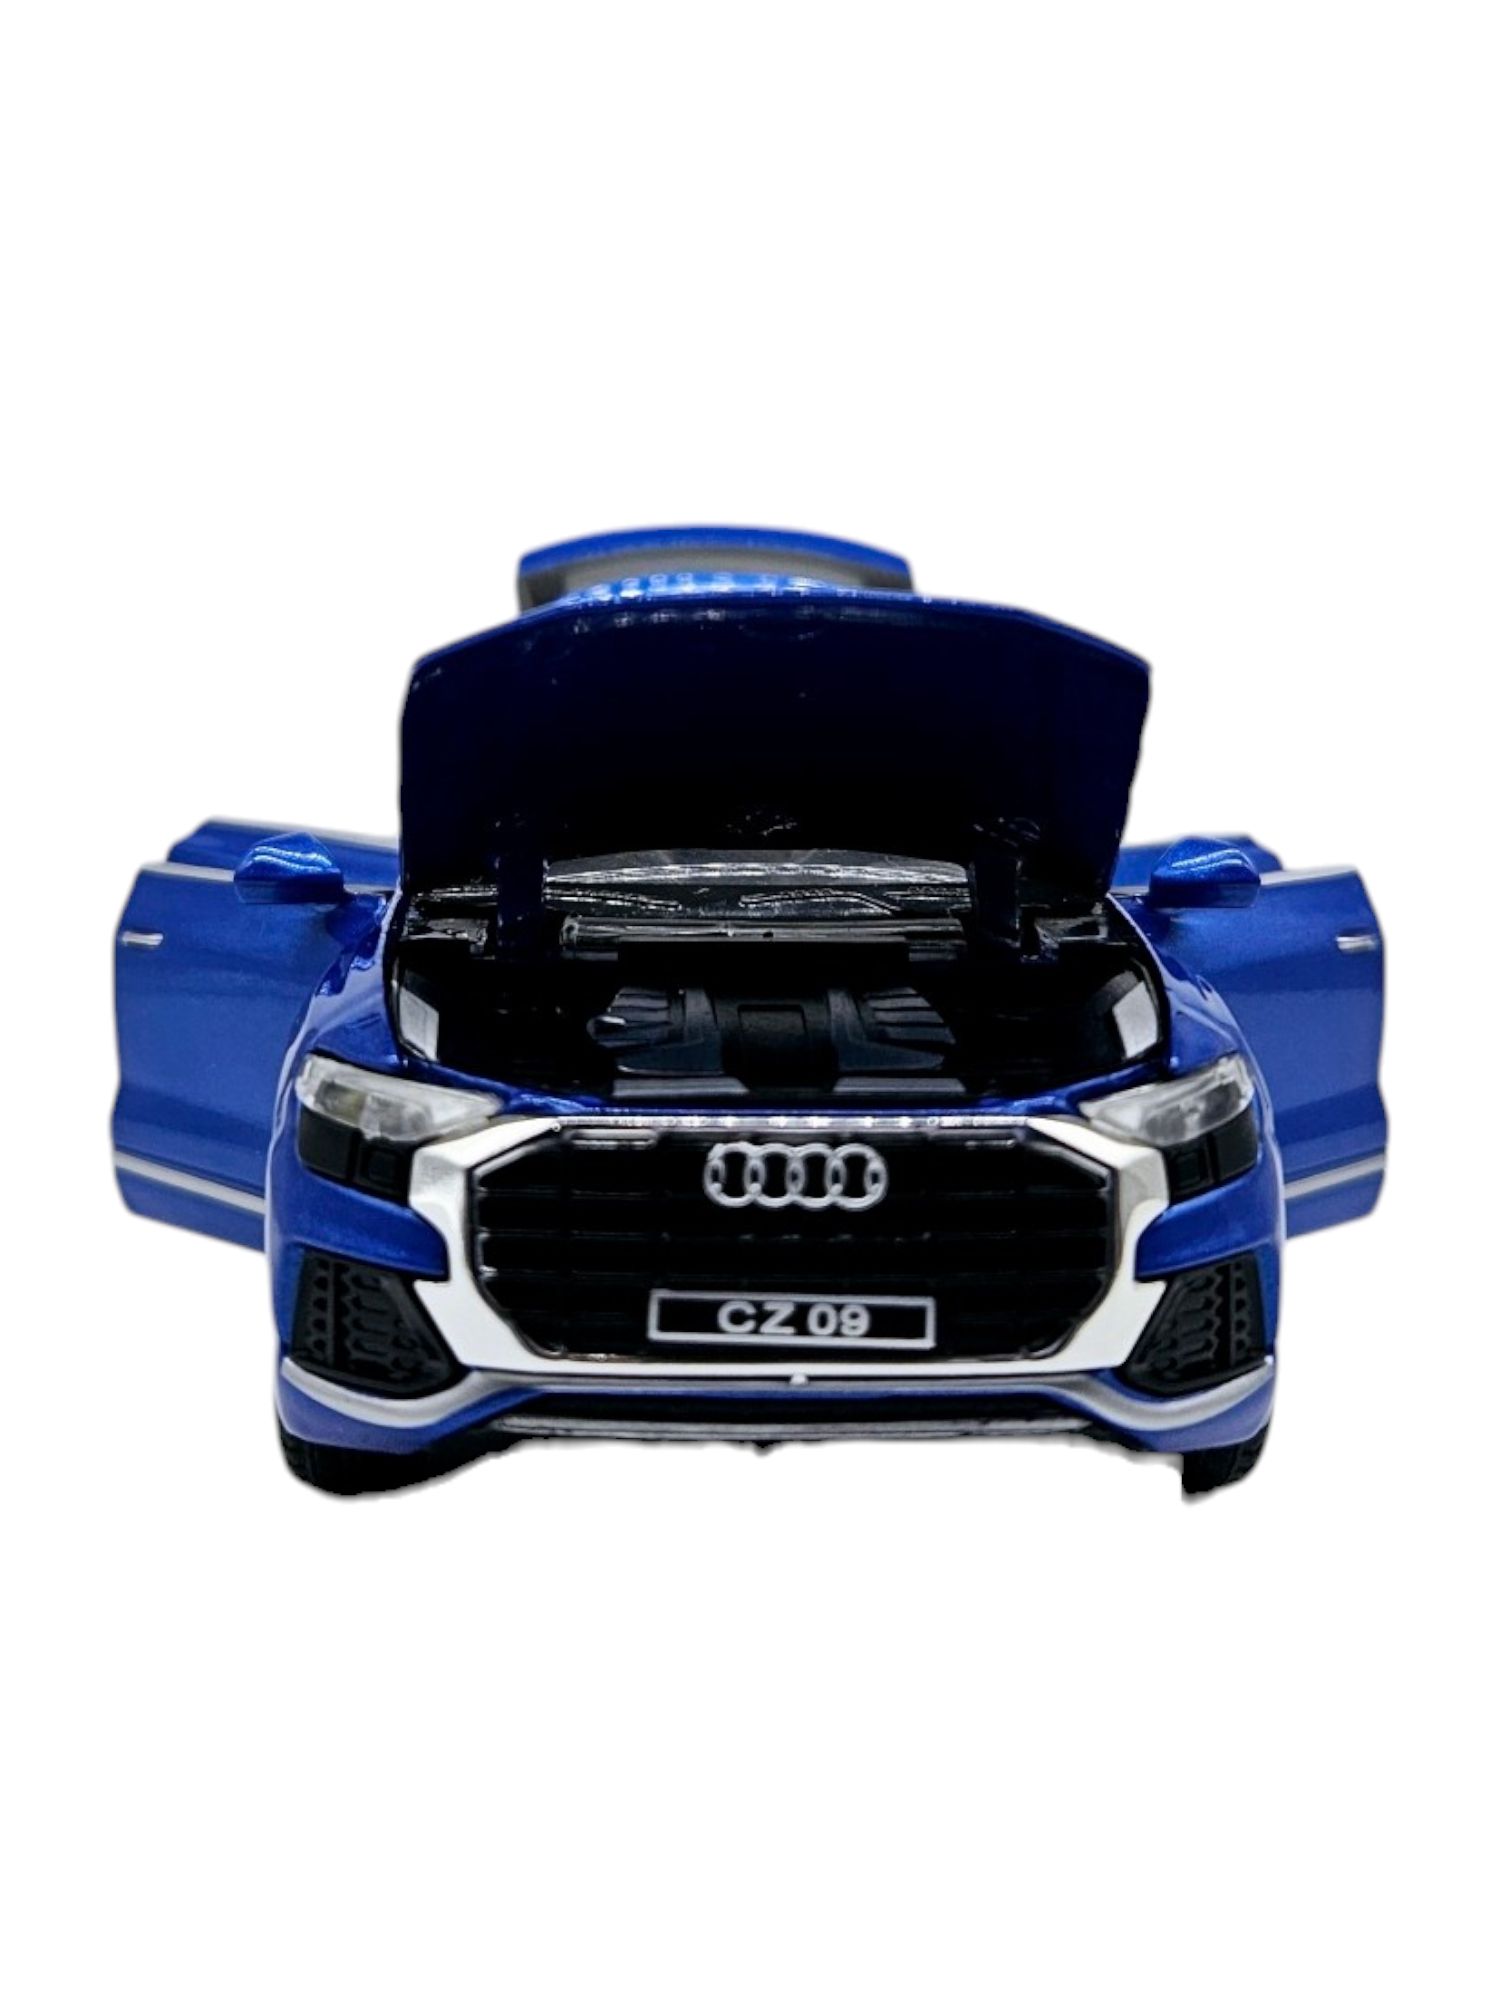 Masina metalica Audi Q8, Sunete si lumini, Usi mobile,16cm, Albastru